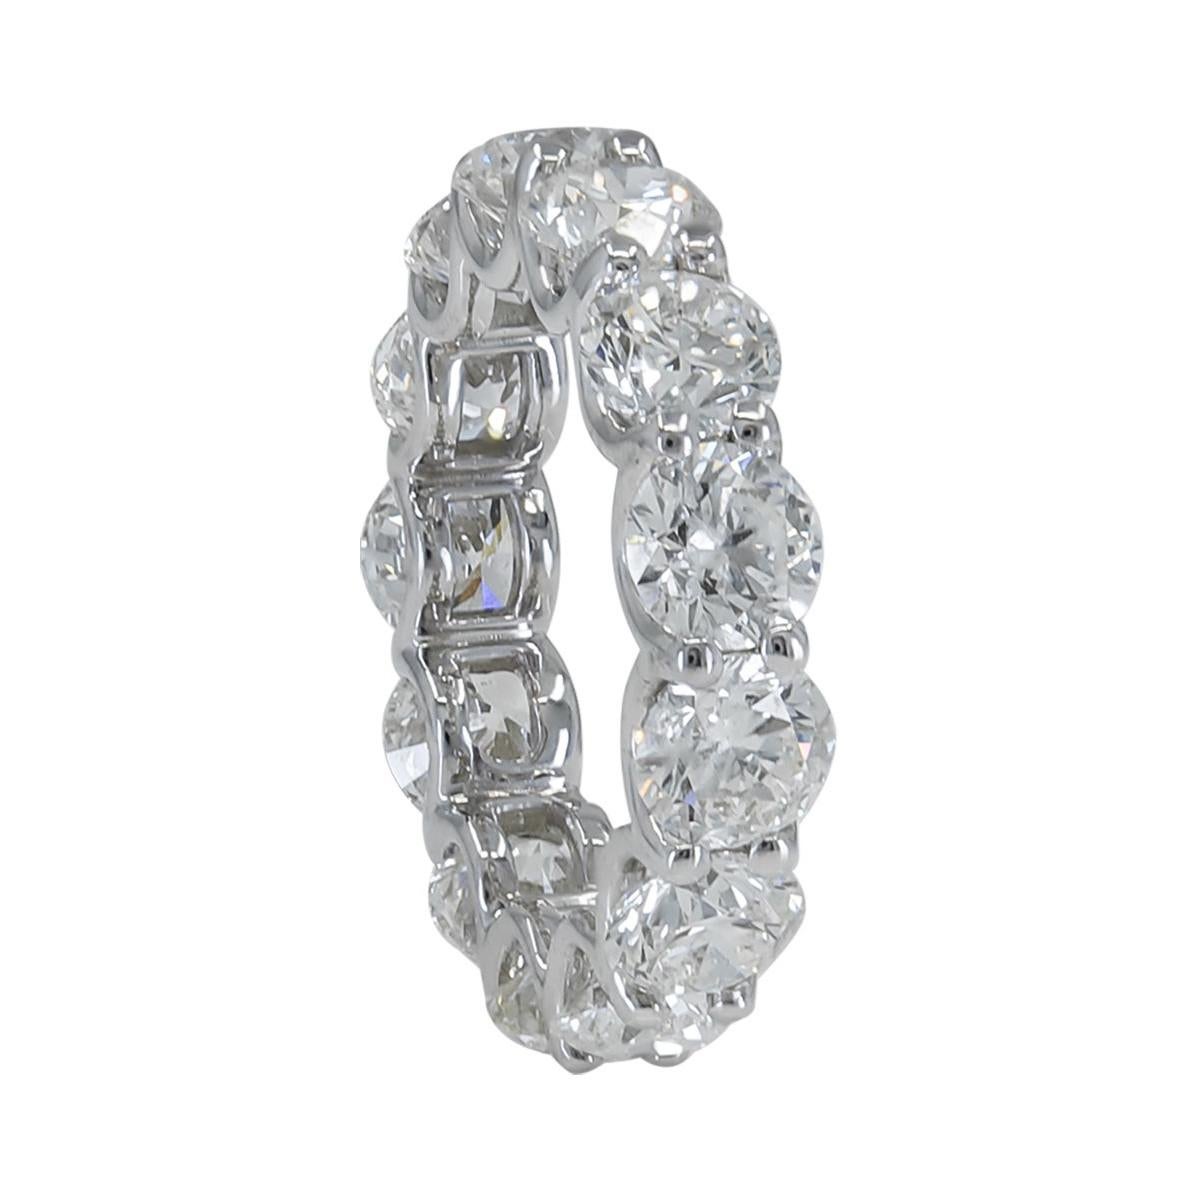 Spectra Fine Jewelry, alliance en diamants ronds de 6,60 carats certifiés GIA